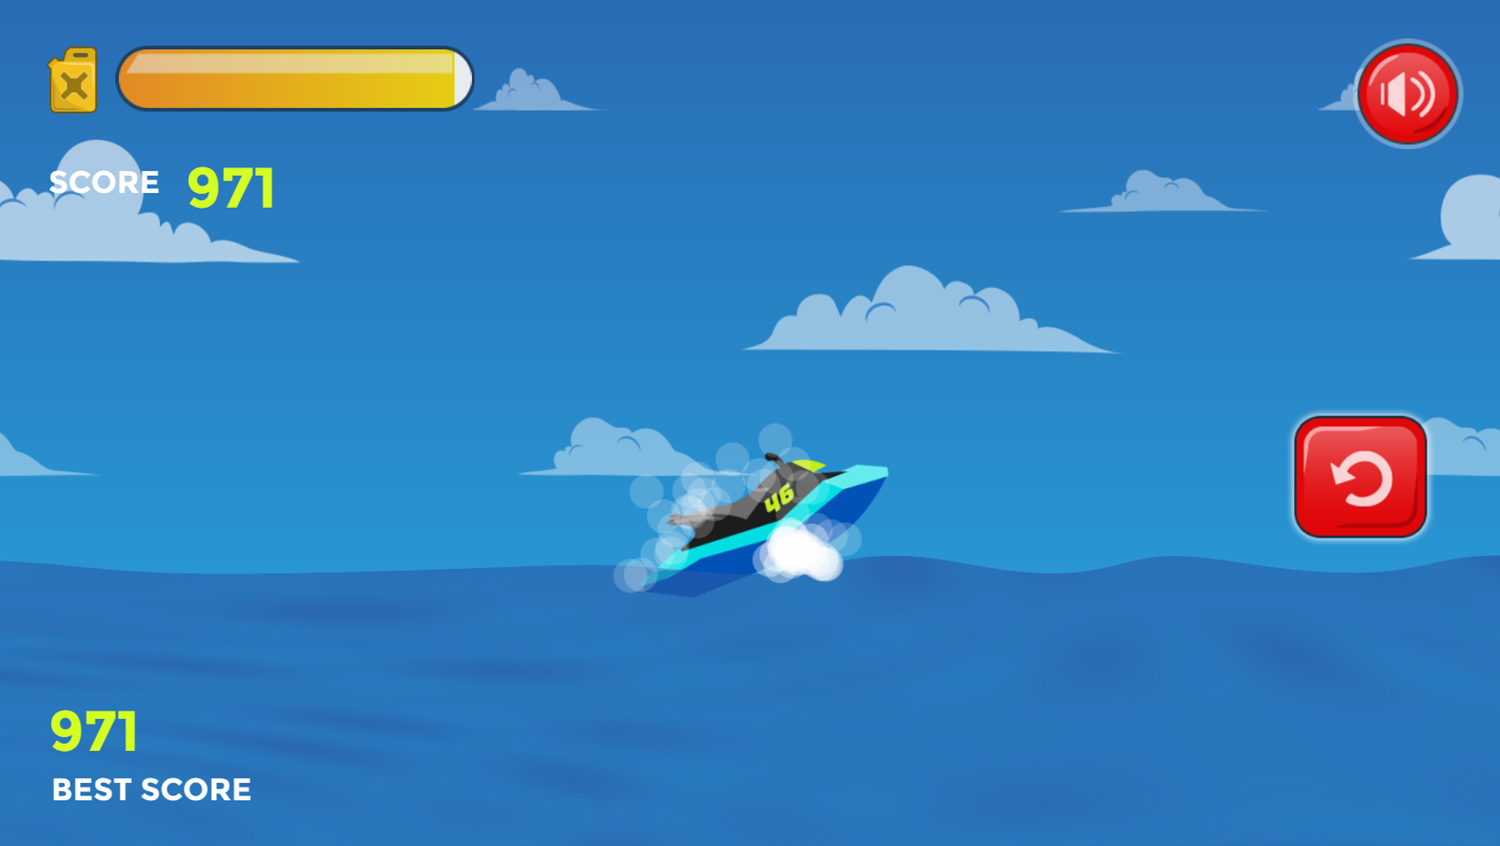 Jet Ski Runner Game Over Screen Screenshot.